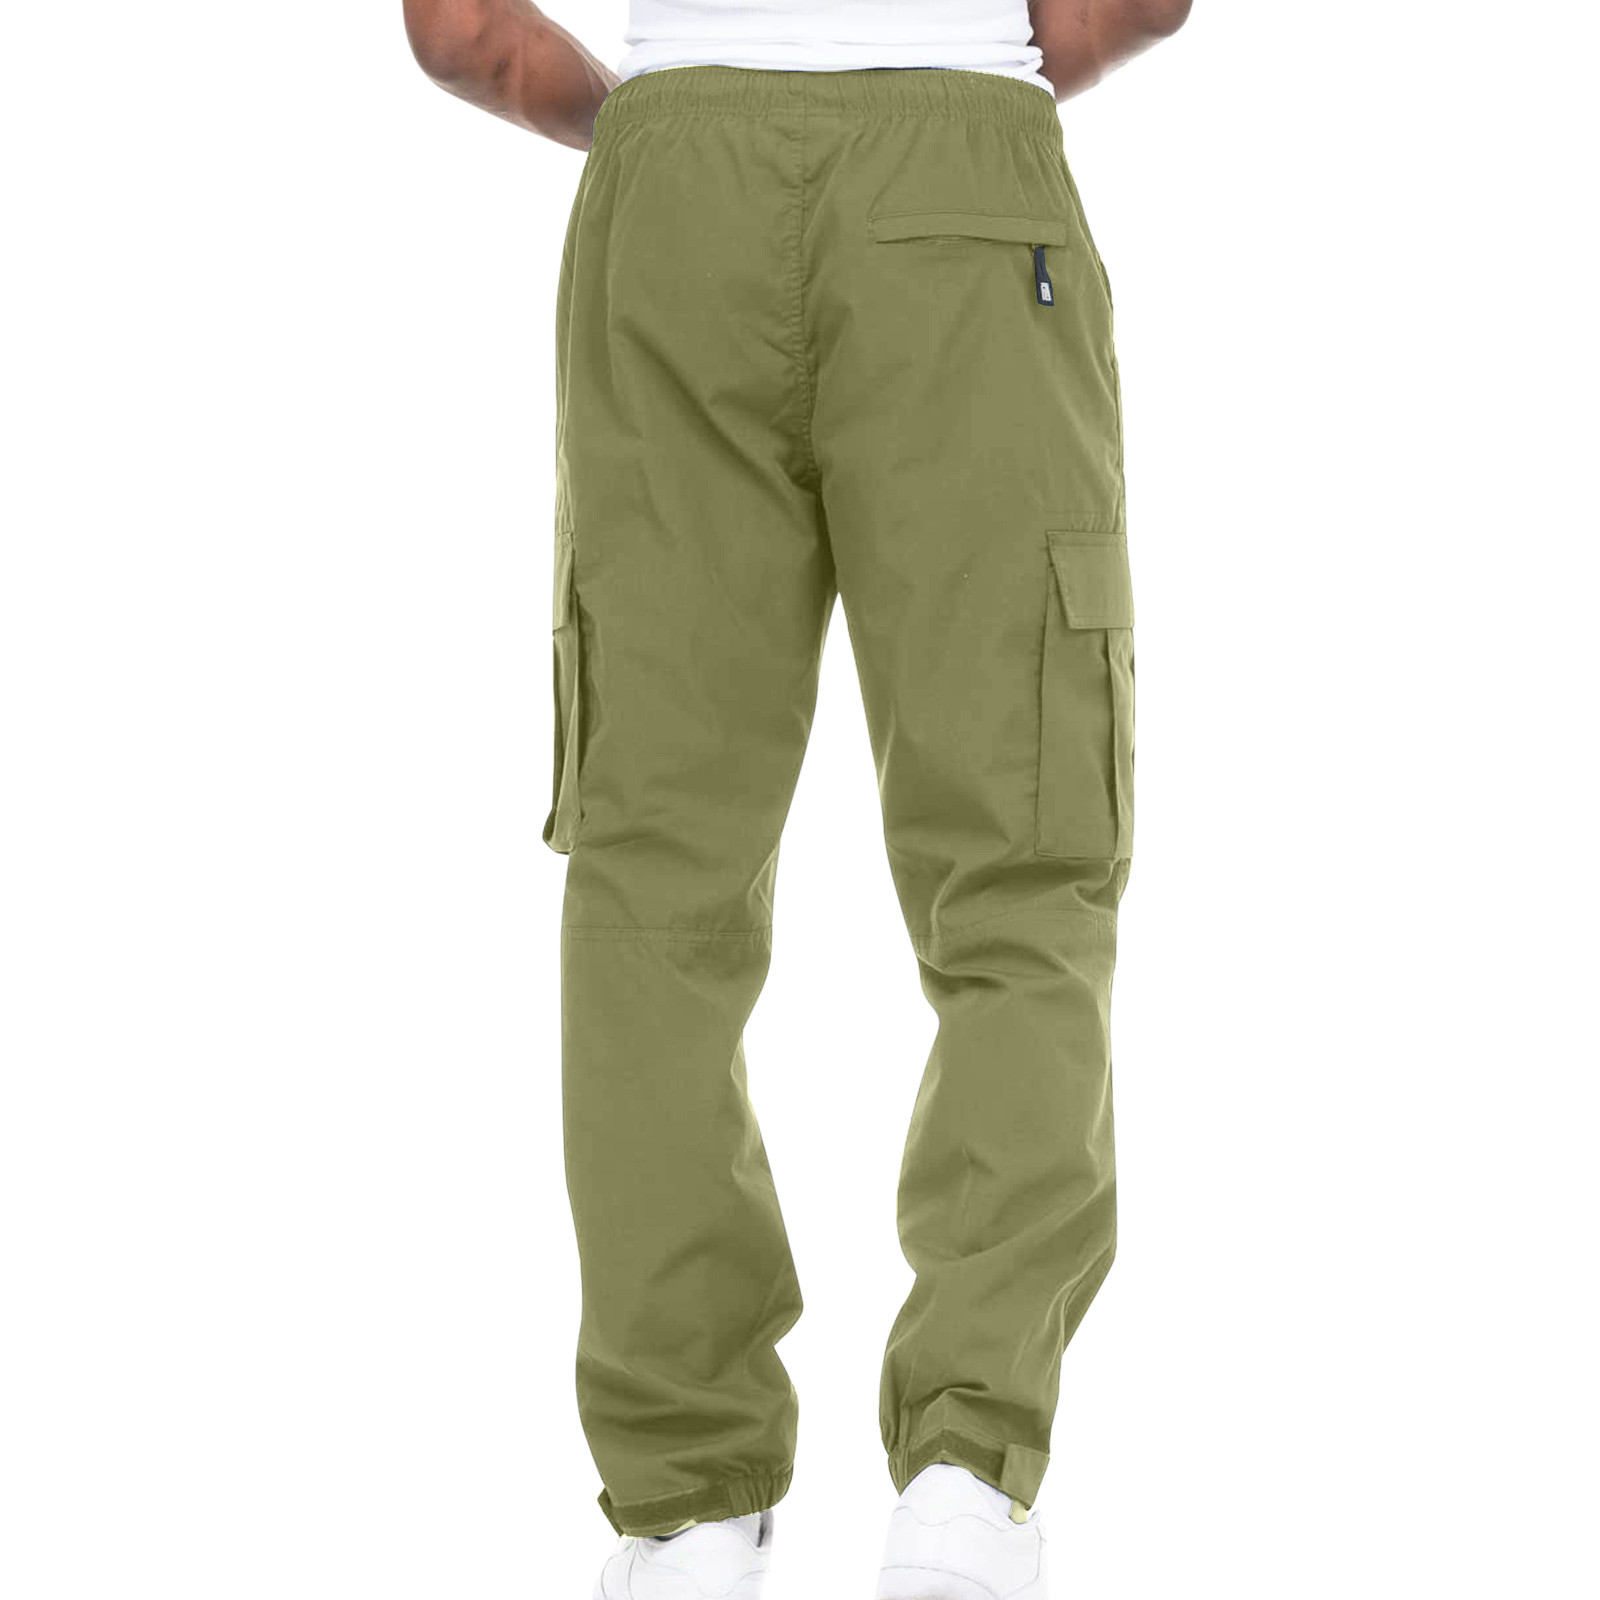 ZKCCNUK Cargo Pants for Men Solid Casual Multiple Pockets Outdoor ...